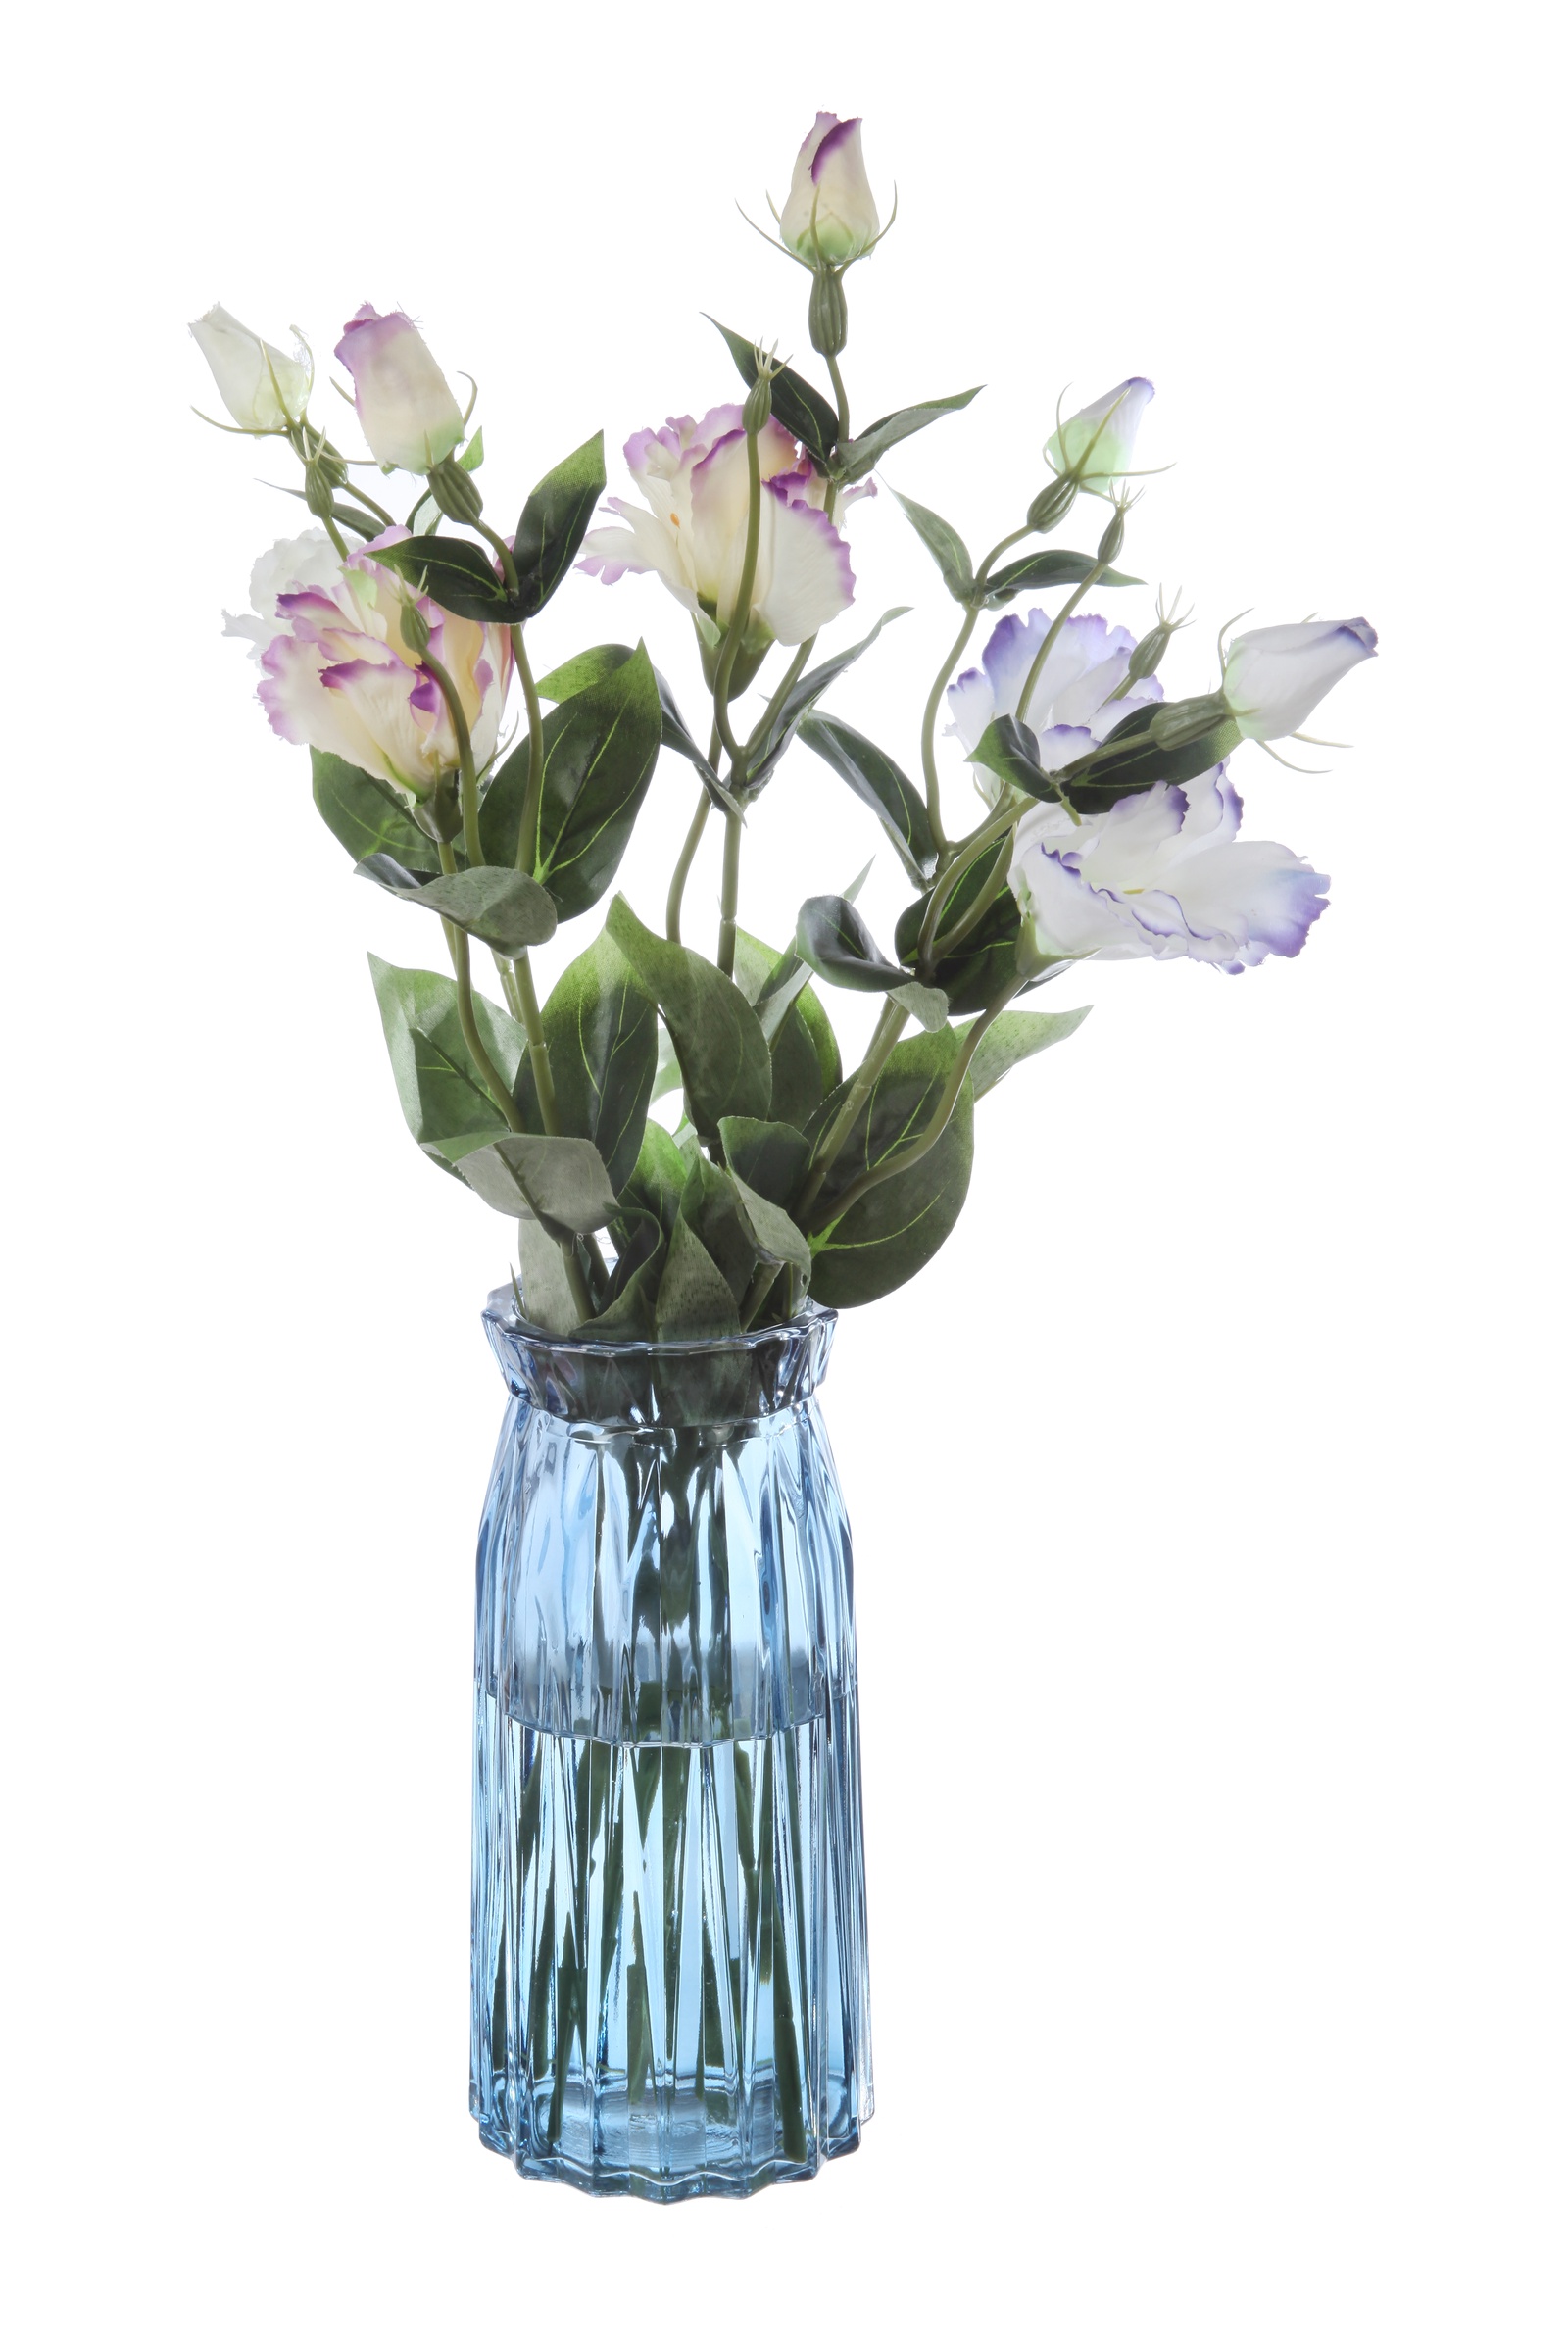 фото Ваза IsmatDecor Стеклянная ваза, ST-9 голубой, голубой